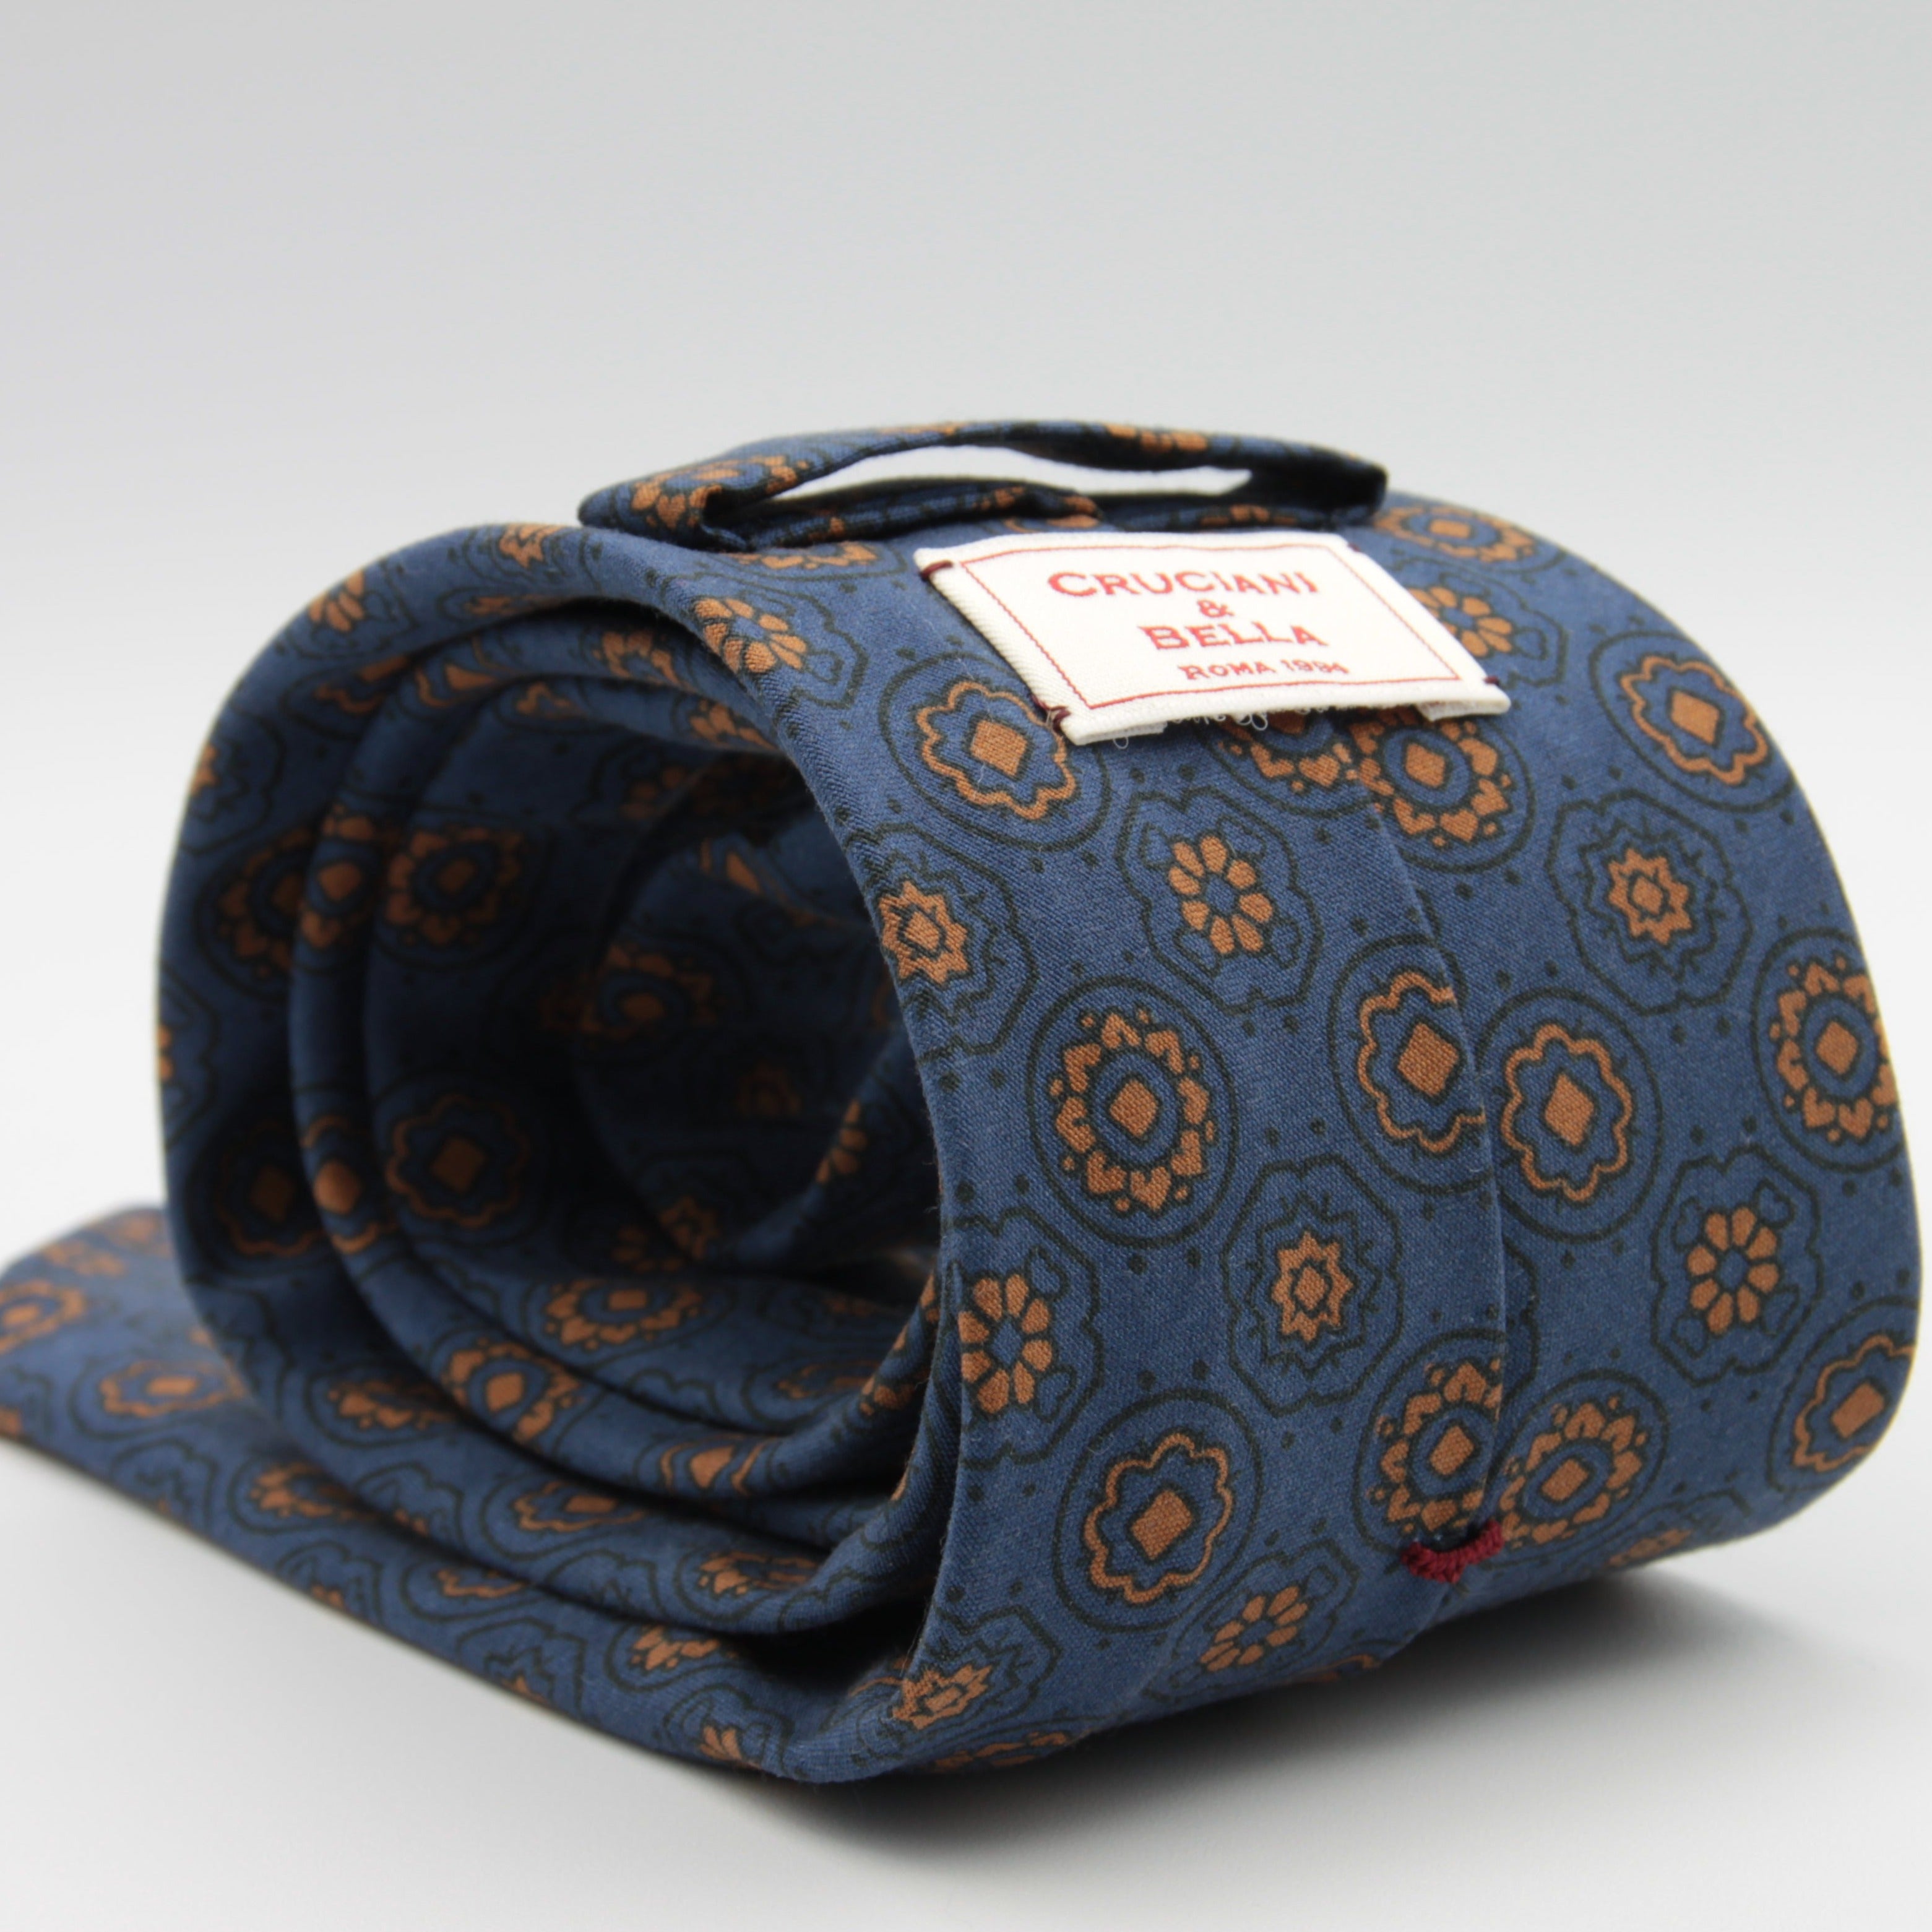 Cruciani & Bella 100% Printed Madder Silk  Italian fabric Unlined tie Blue and Brown Motifs Tie Handmade in Italy 8 cm x 150 cm #7640